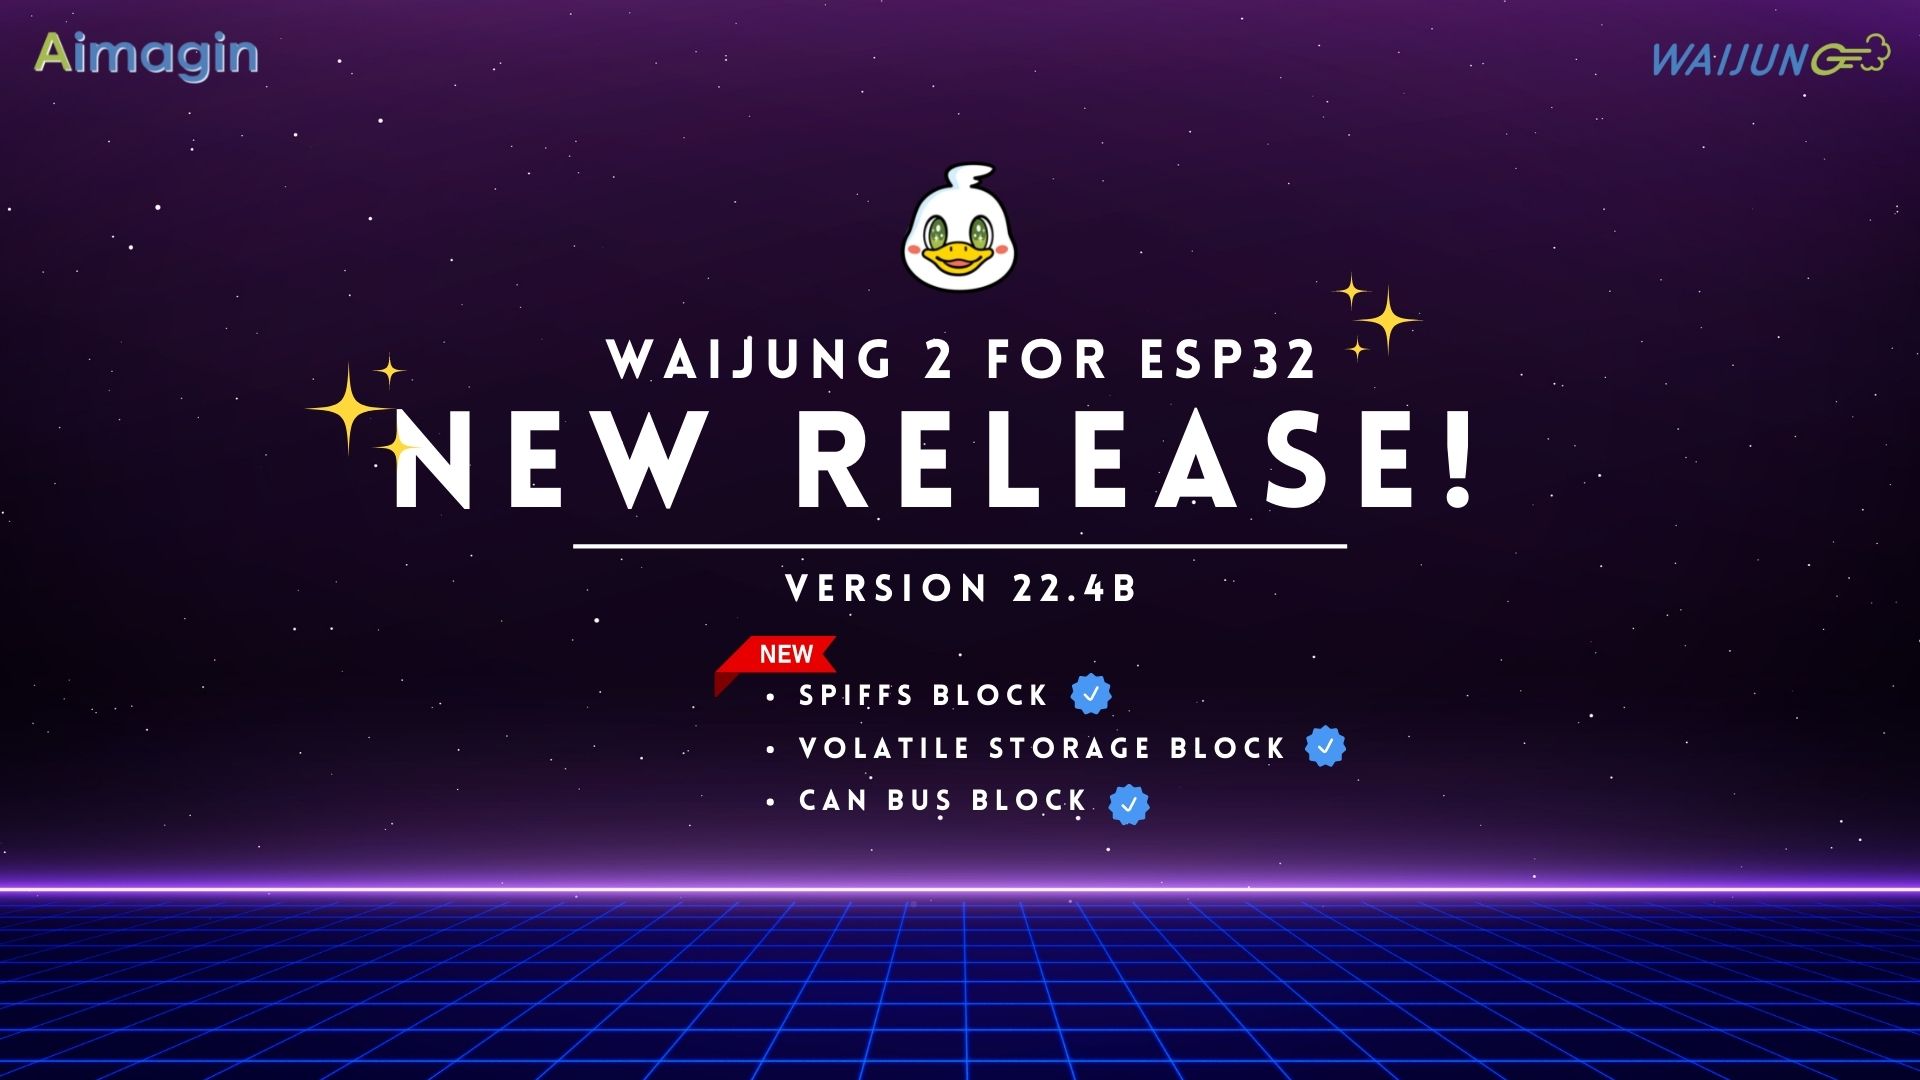 New Release!! Waijung 2 for ESP32 ver. 22.4b